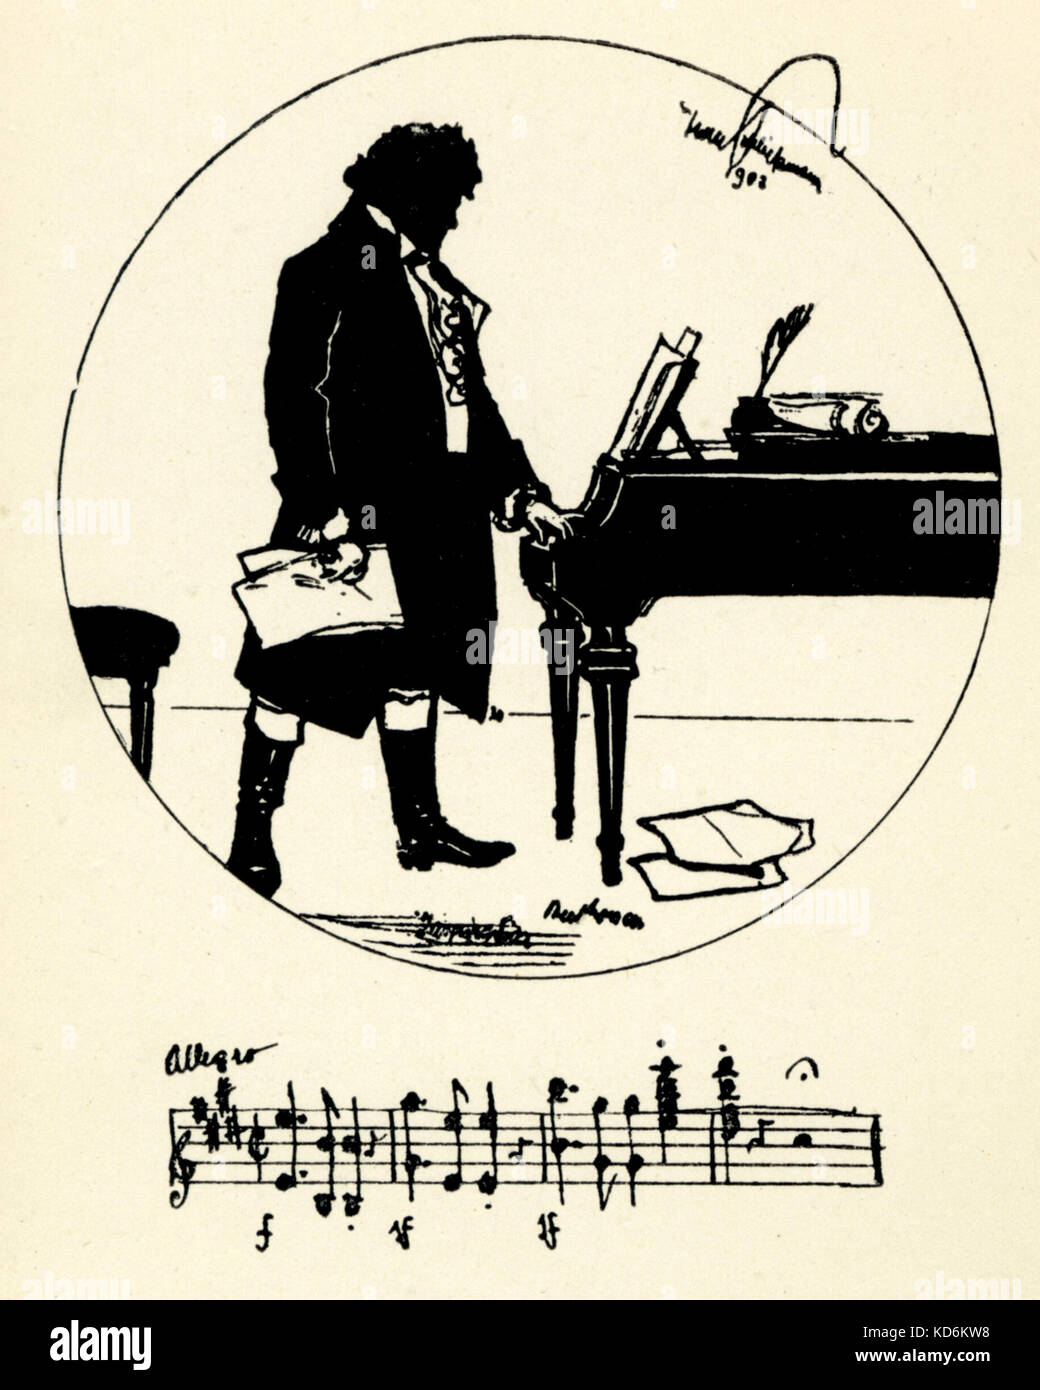 Ludwig Van Beethoven Standing With Hand On Piano Keyboard Holding